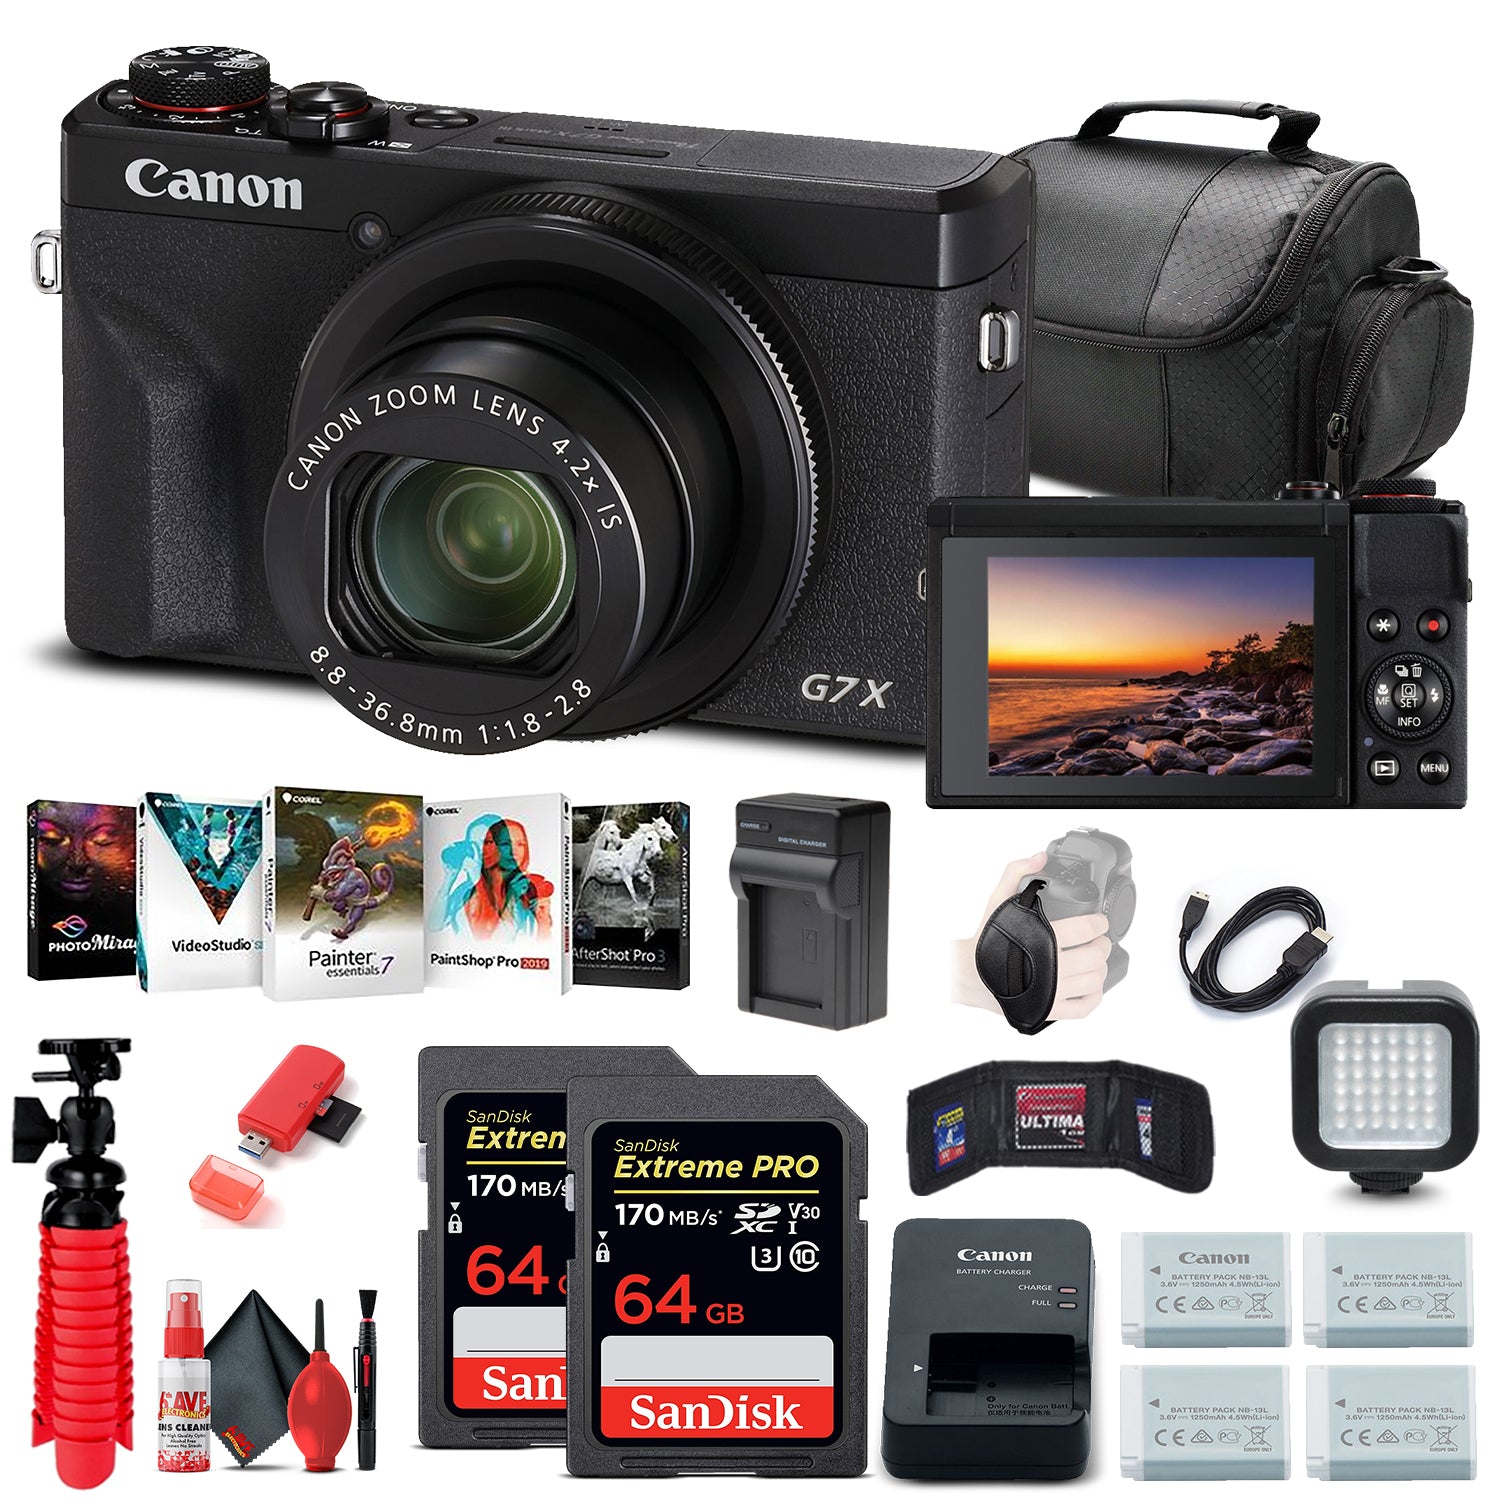 Canon PowerShot G7 X Mark III Digital Camera (3637C001) + 2 x 64GB Cards + More